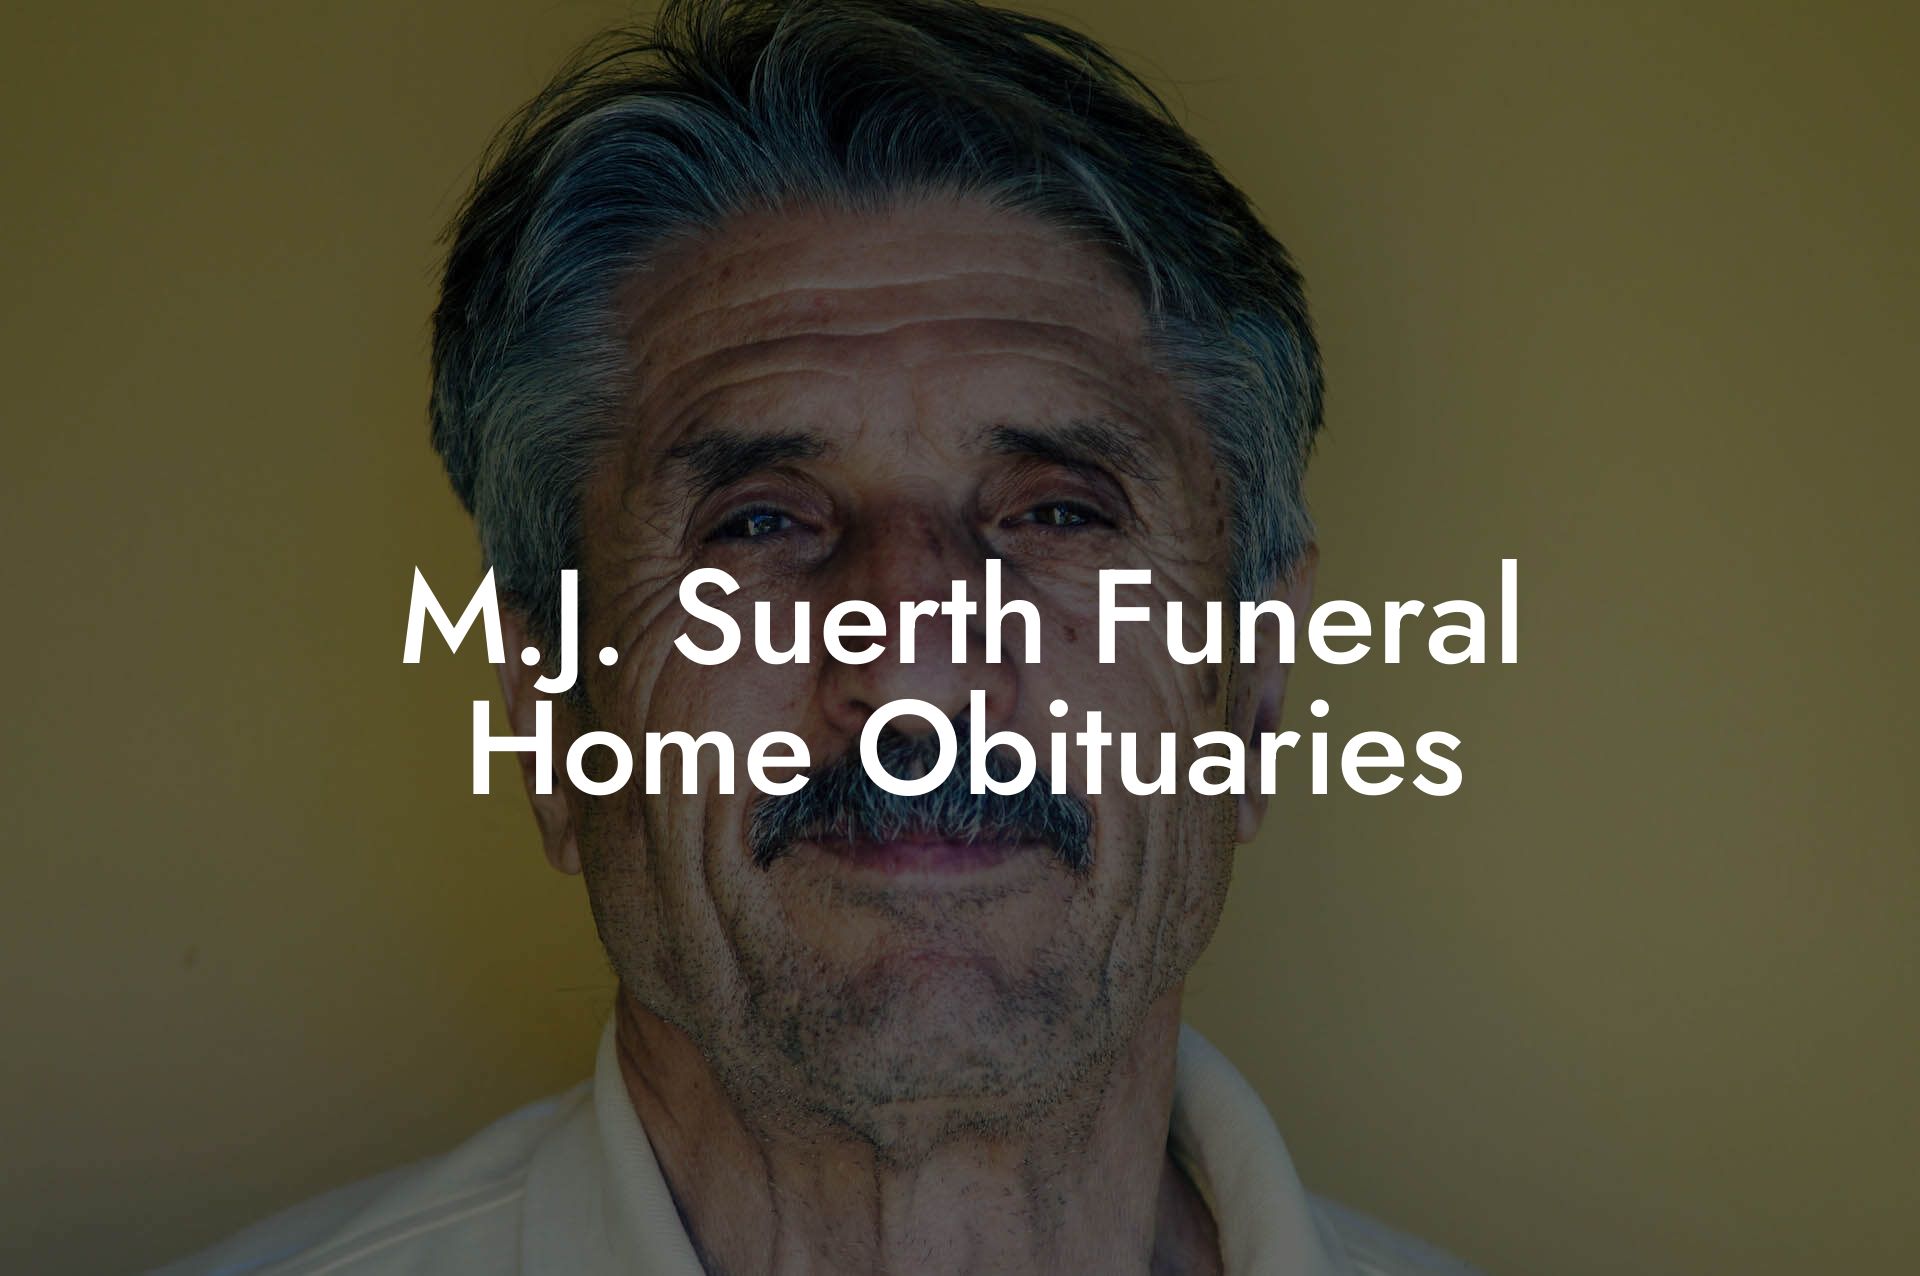 M.J. Suerth Funeral Home Obituaries